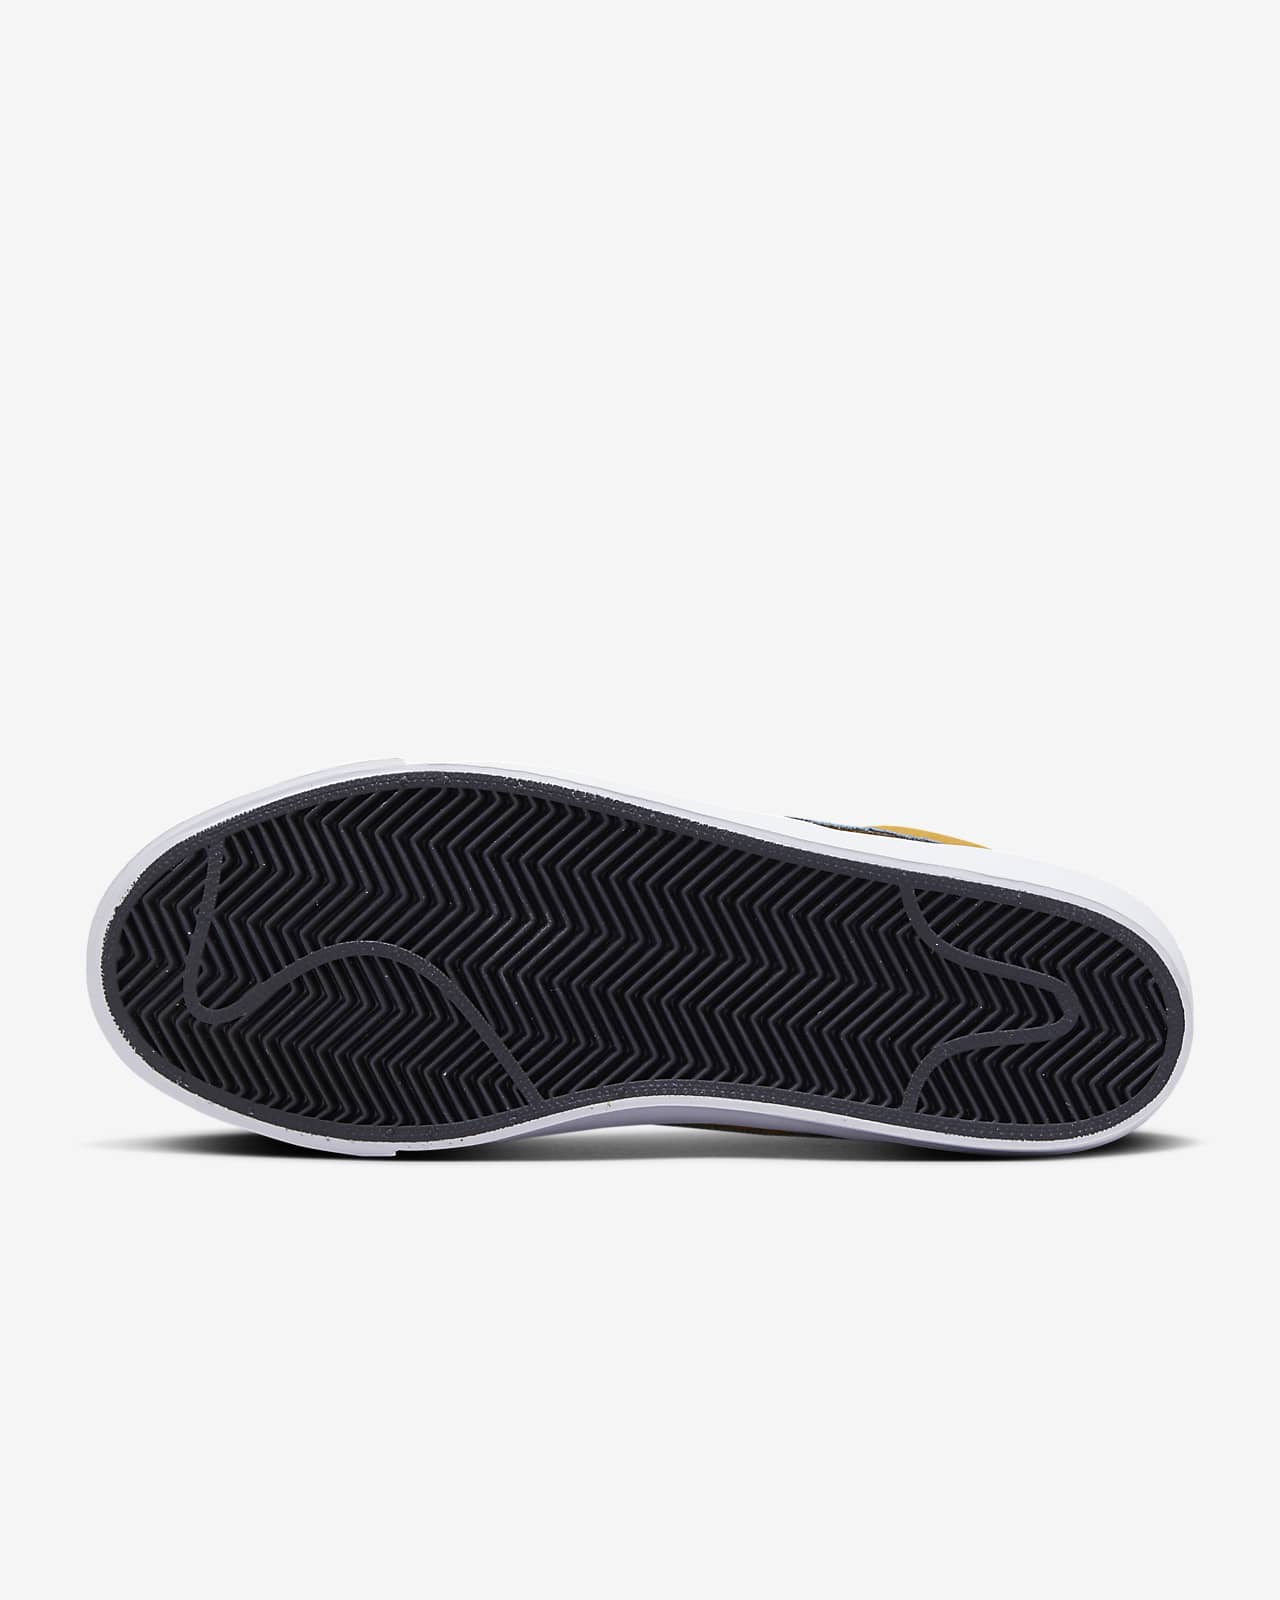 Nike Zoom Blazer Mid Pro GT Skate Shoes